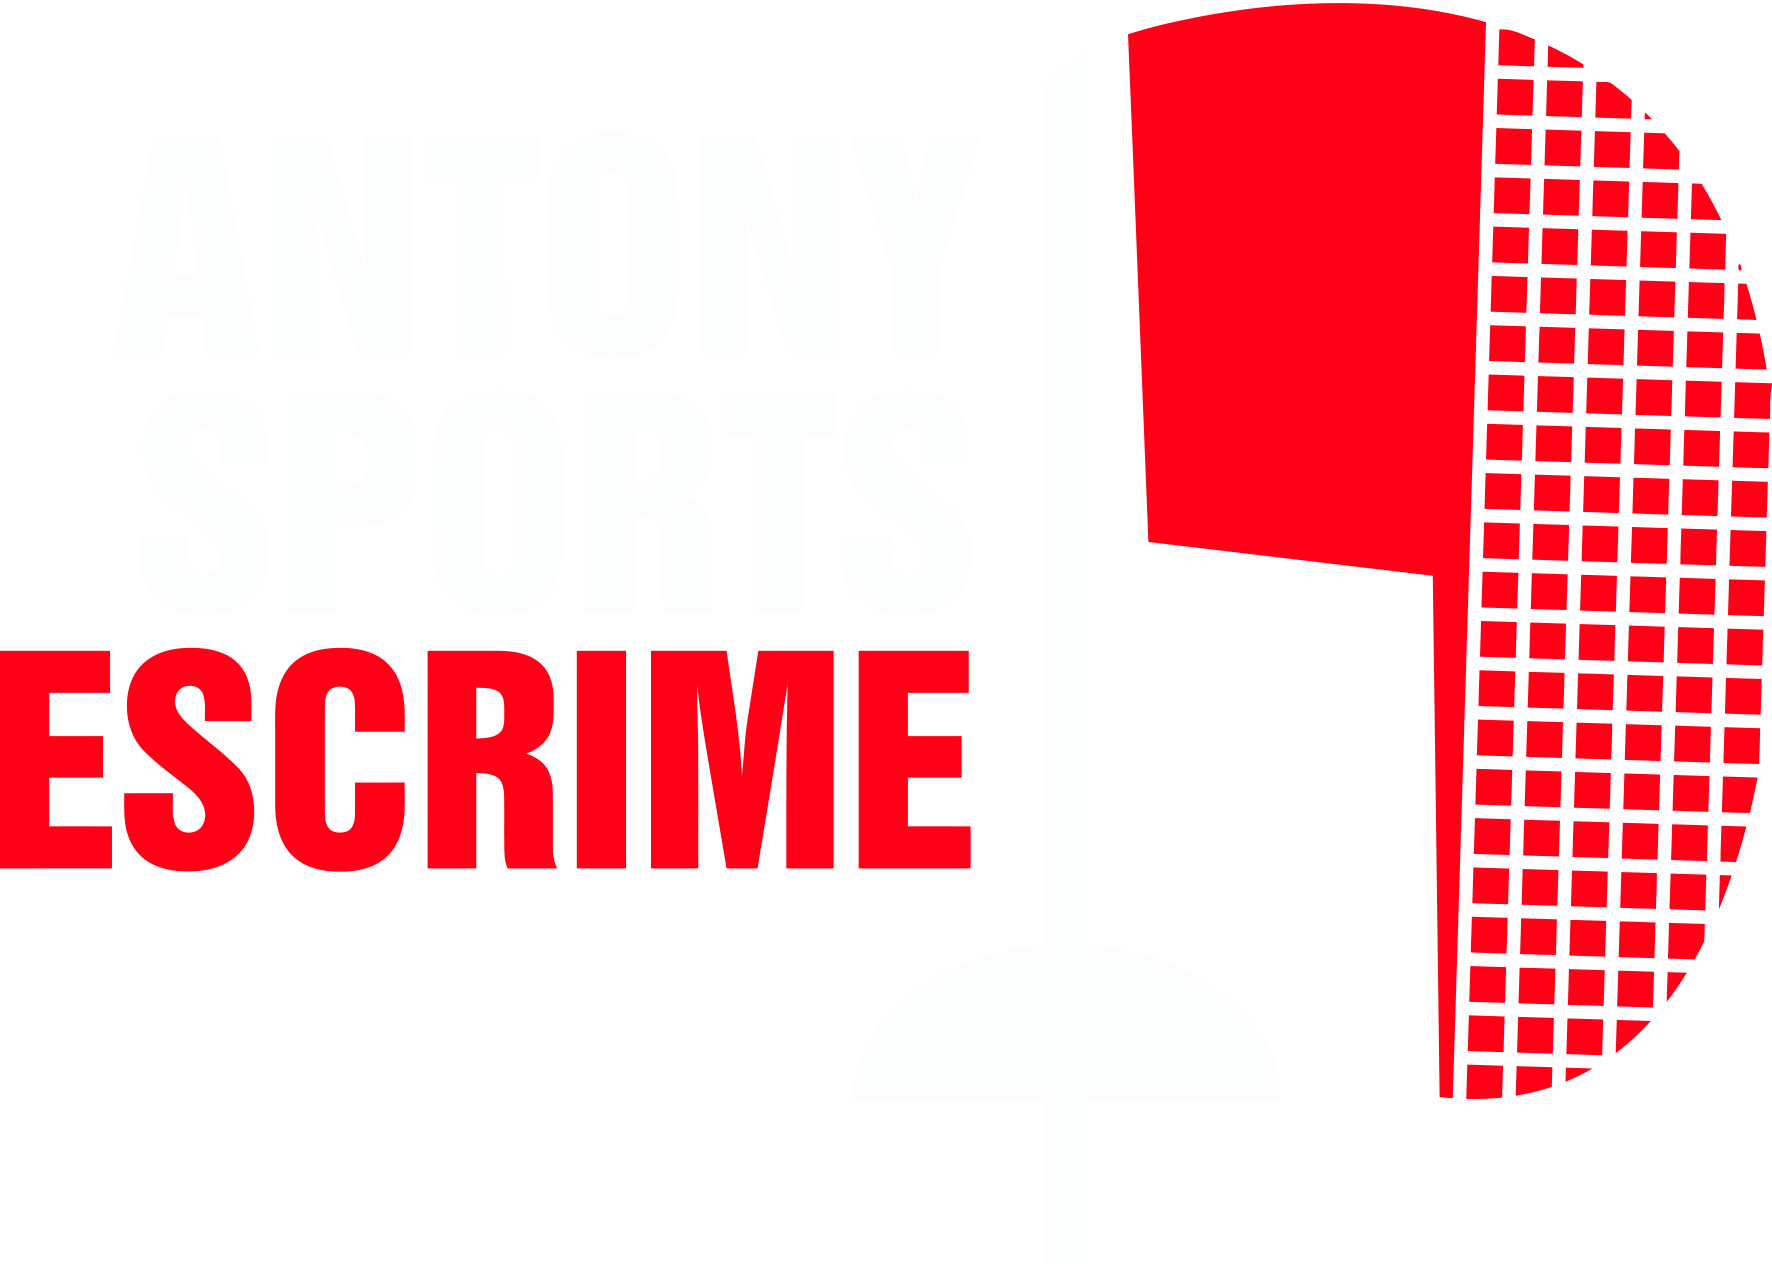 antony-sports-escrime